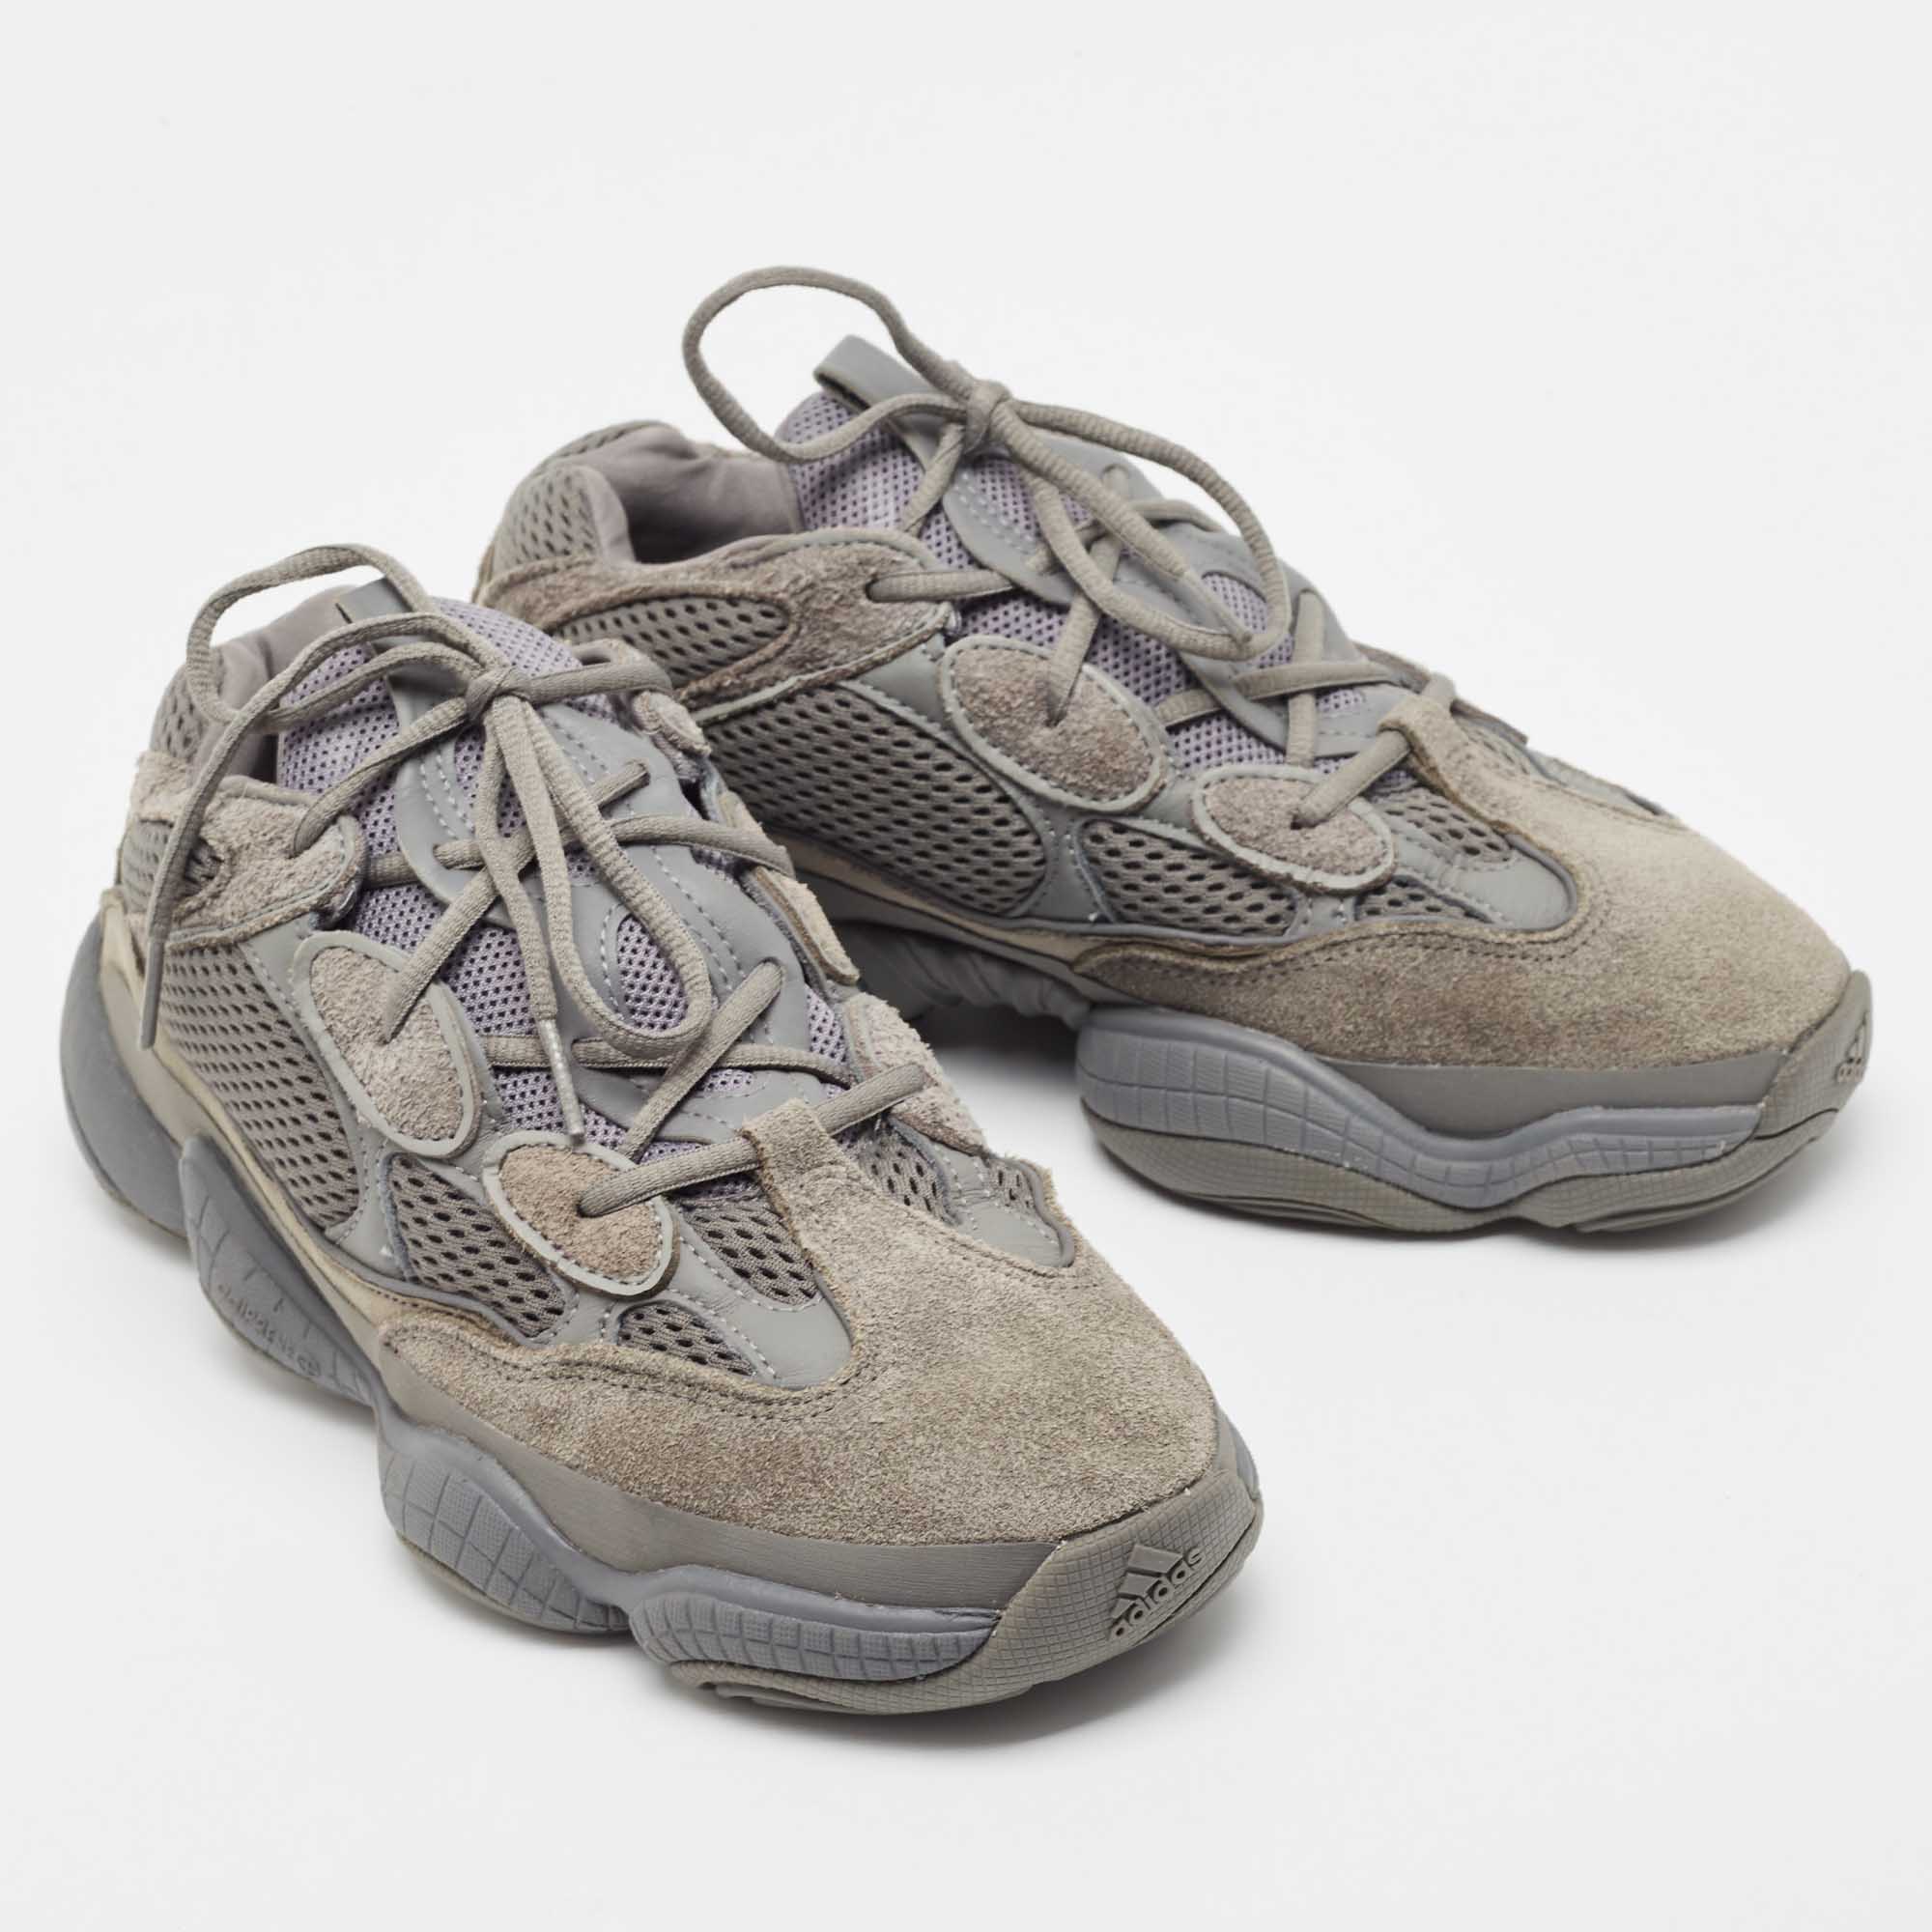 Yeezy X Adidas Grey Suede And Leather Yeezy-500 Utility- Grey Sneakers Size 43 1/3